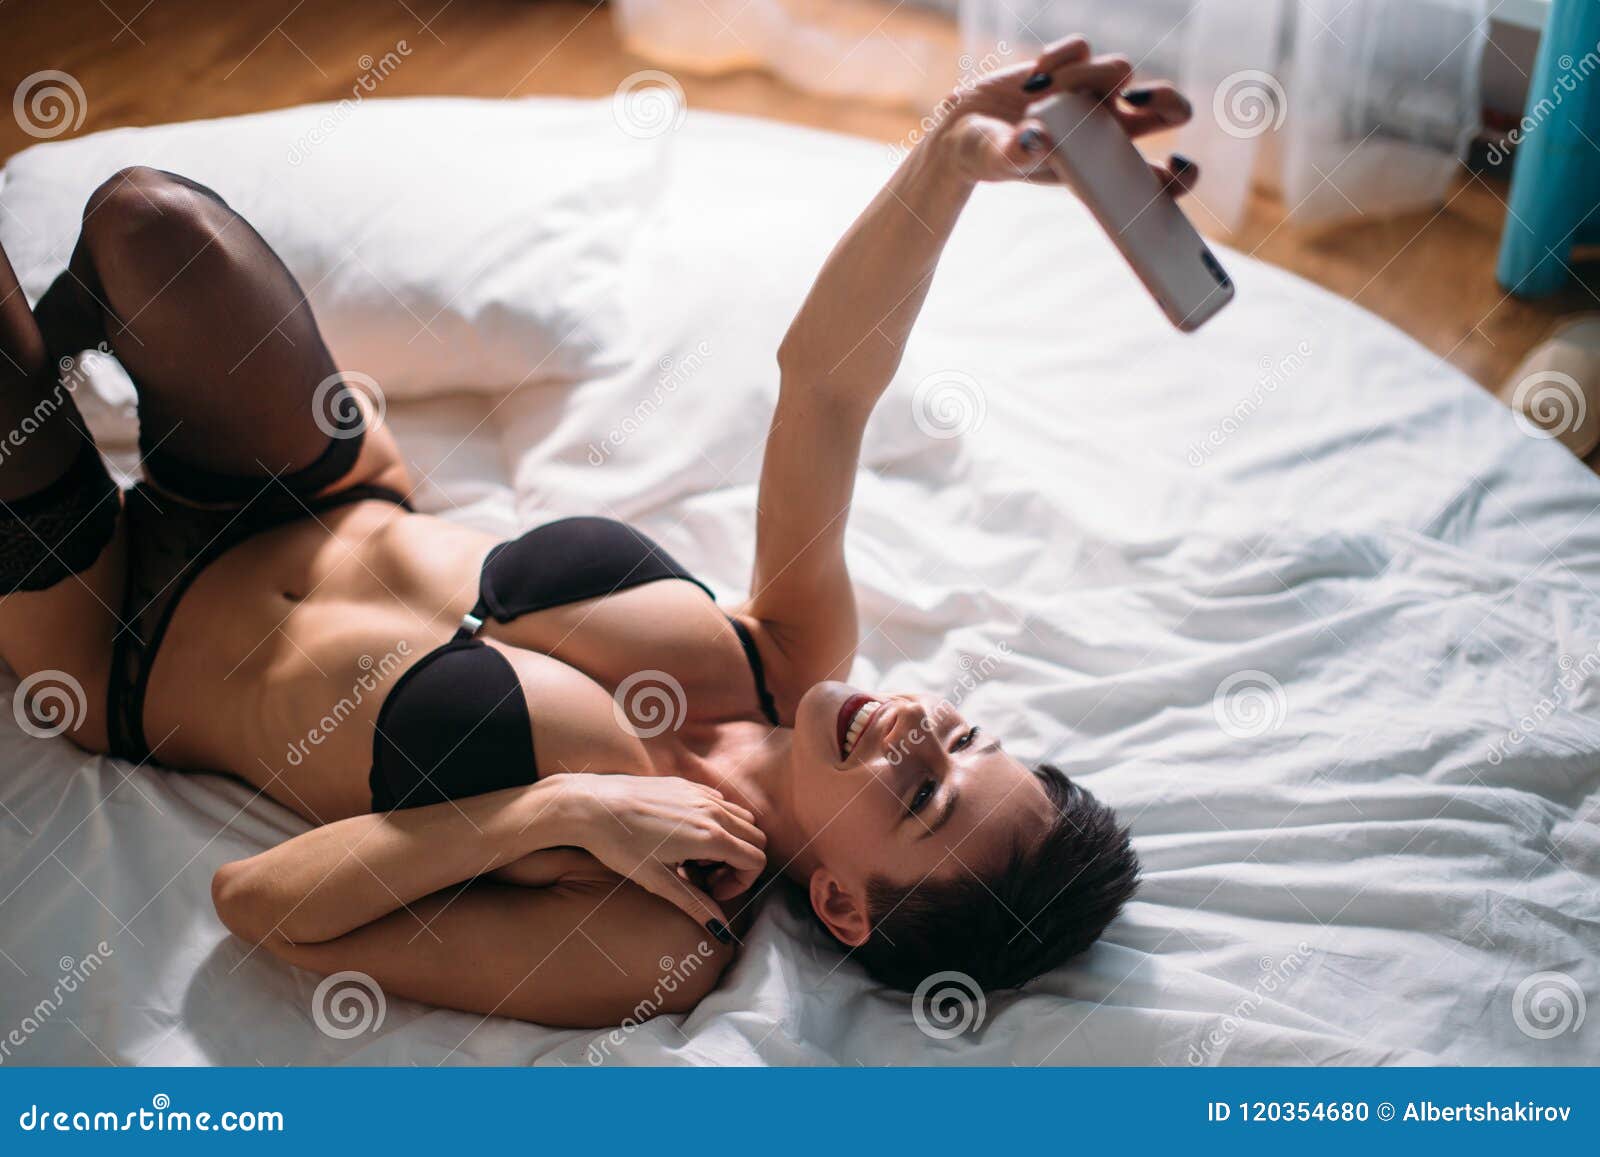 average nude mature woman selfie